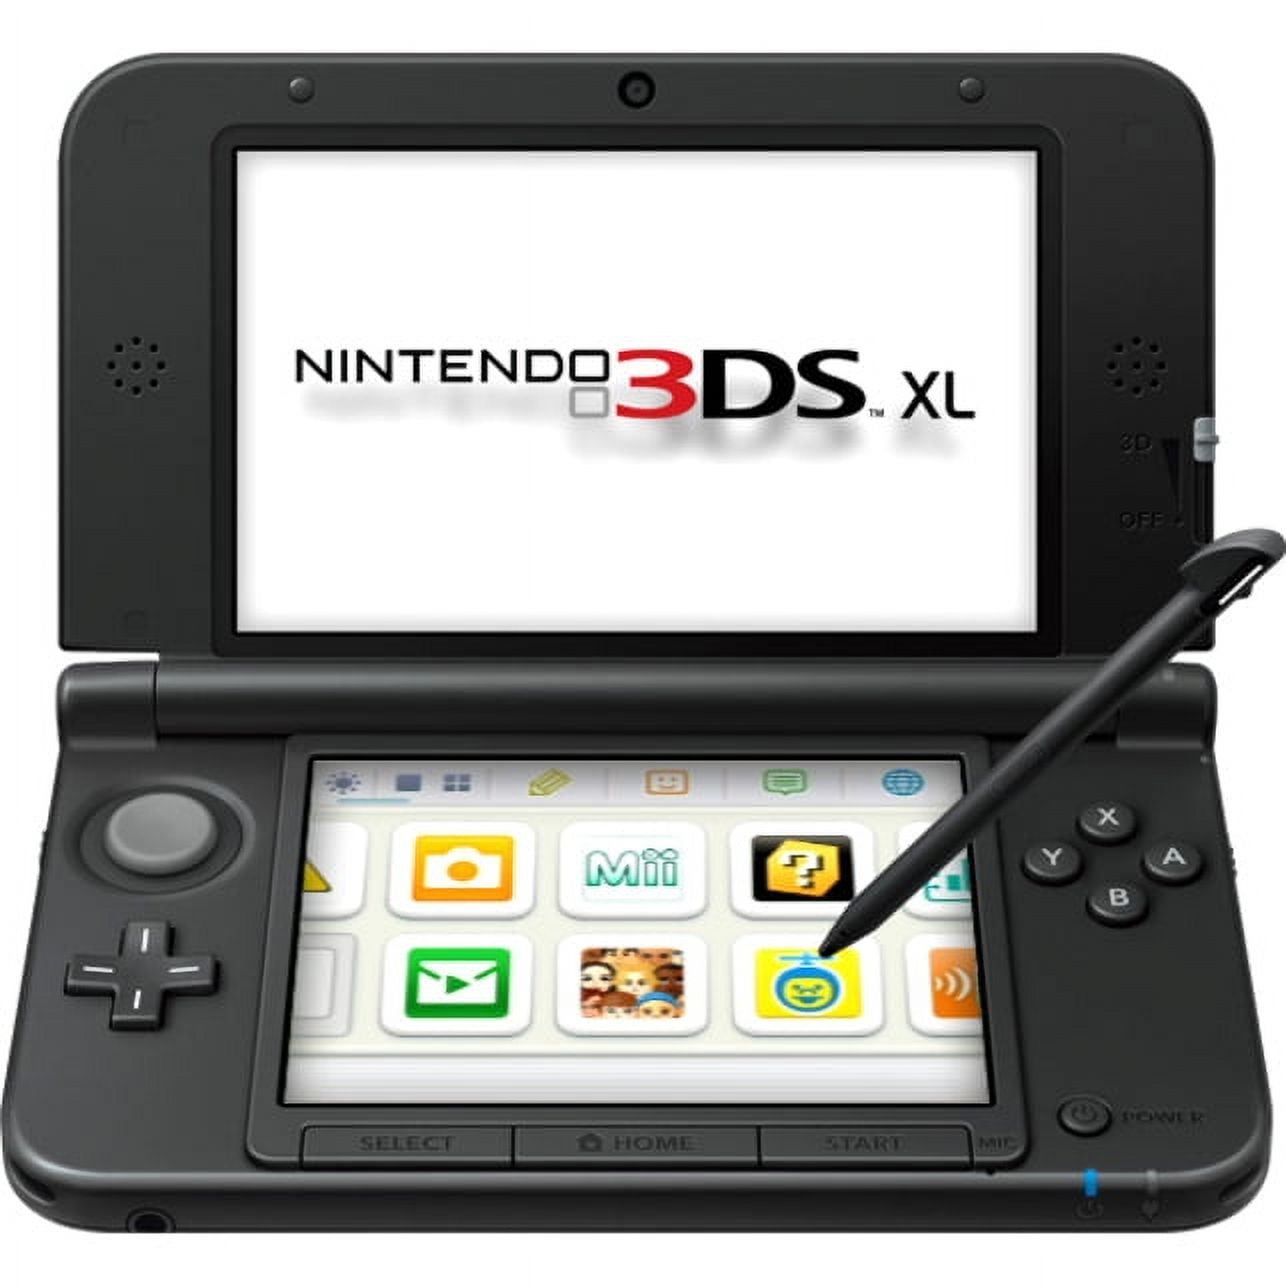 Nintendo Launches $170 DSi In North America